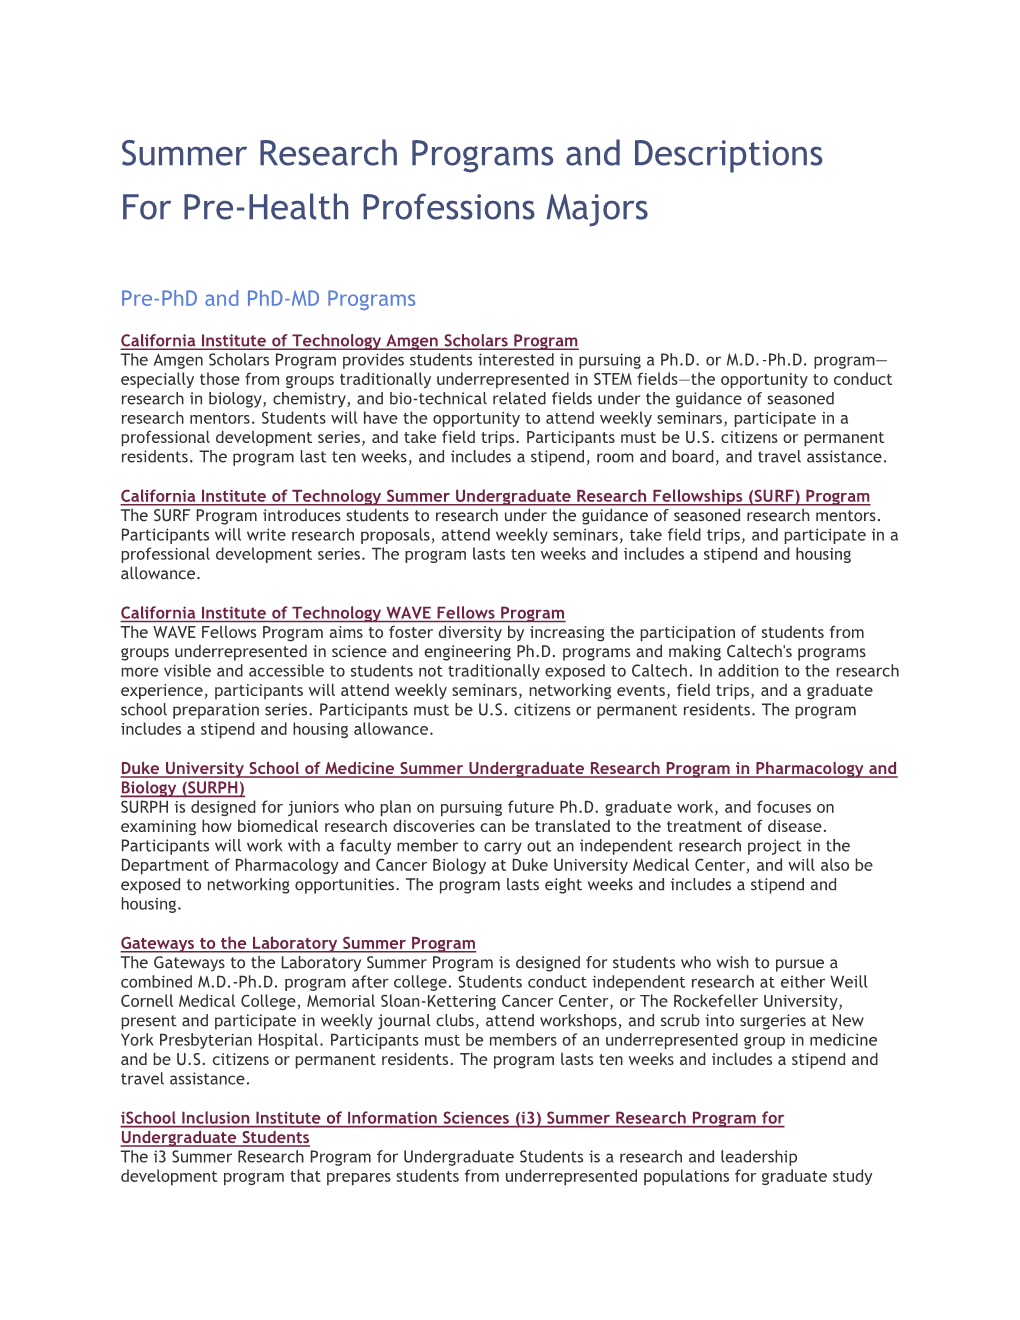 Summer Research Programs and Descriptions for Pre-Health Professions Majors